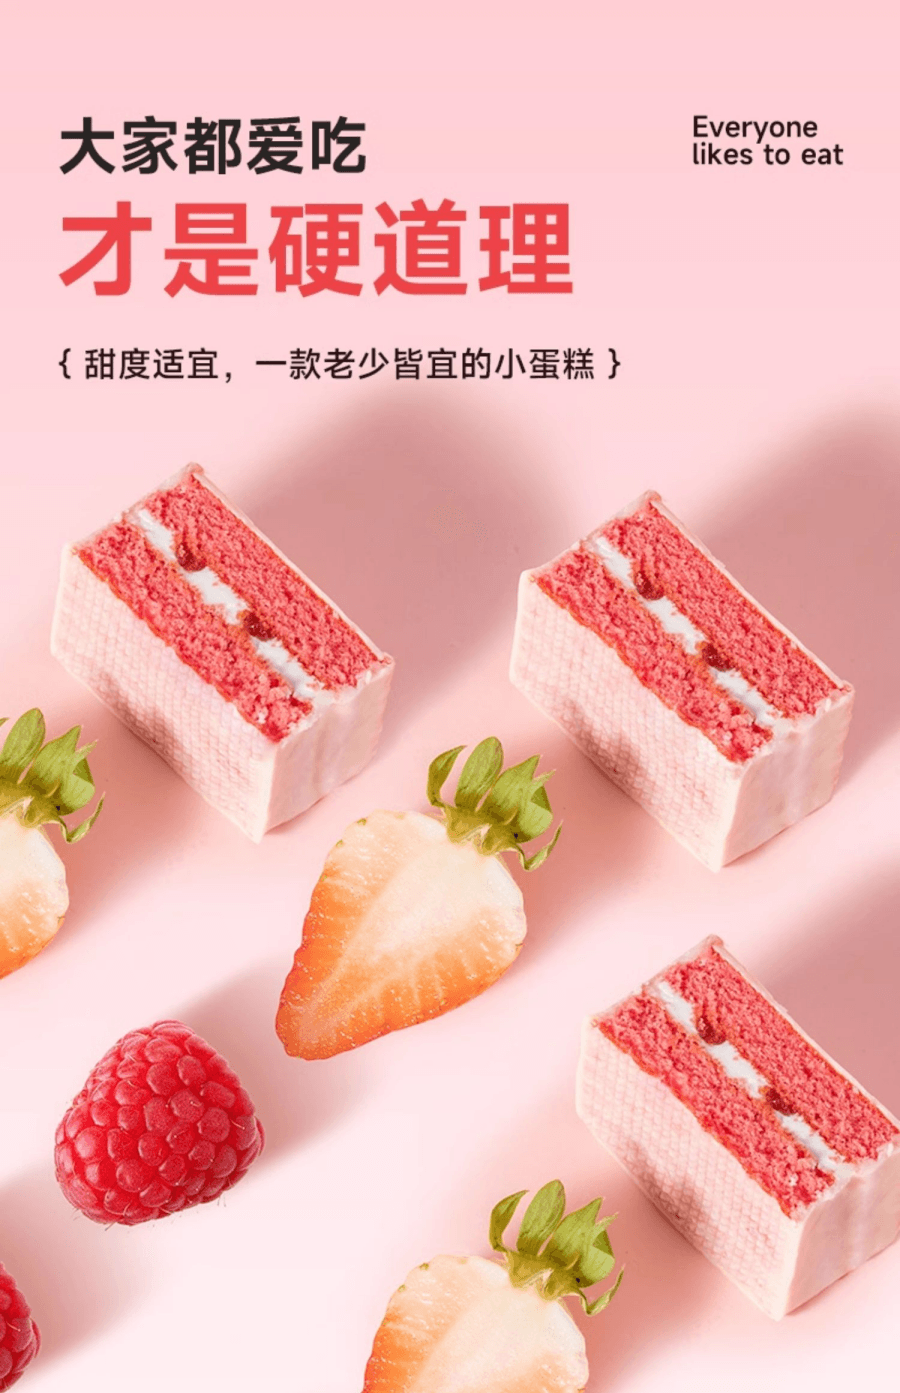 Chongdong Cake 17Bags <chromeannotation role="link" style="border-bottom-width: 1px; border-bottom-style: dotted; border-bottom-color: rgba(0 0 0, 0.85);">430G</chromeannotation> Grape Flavor